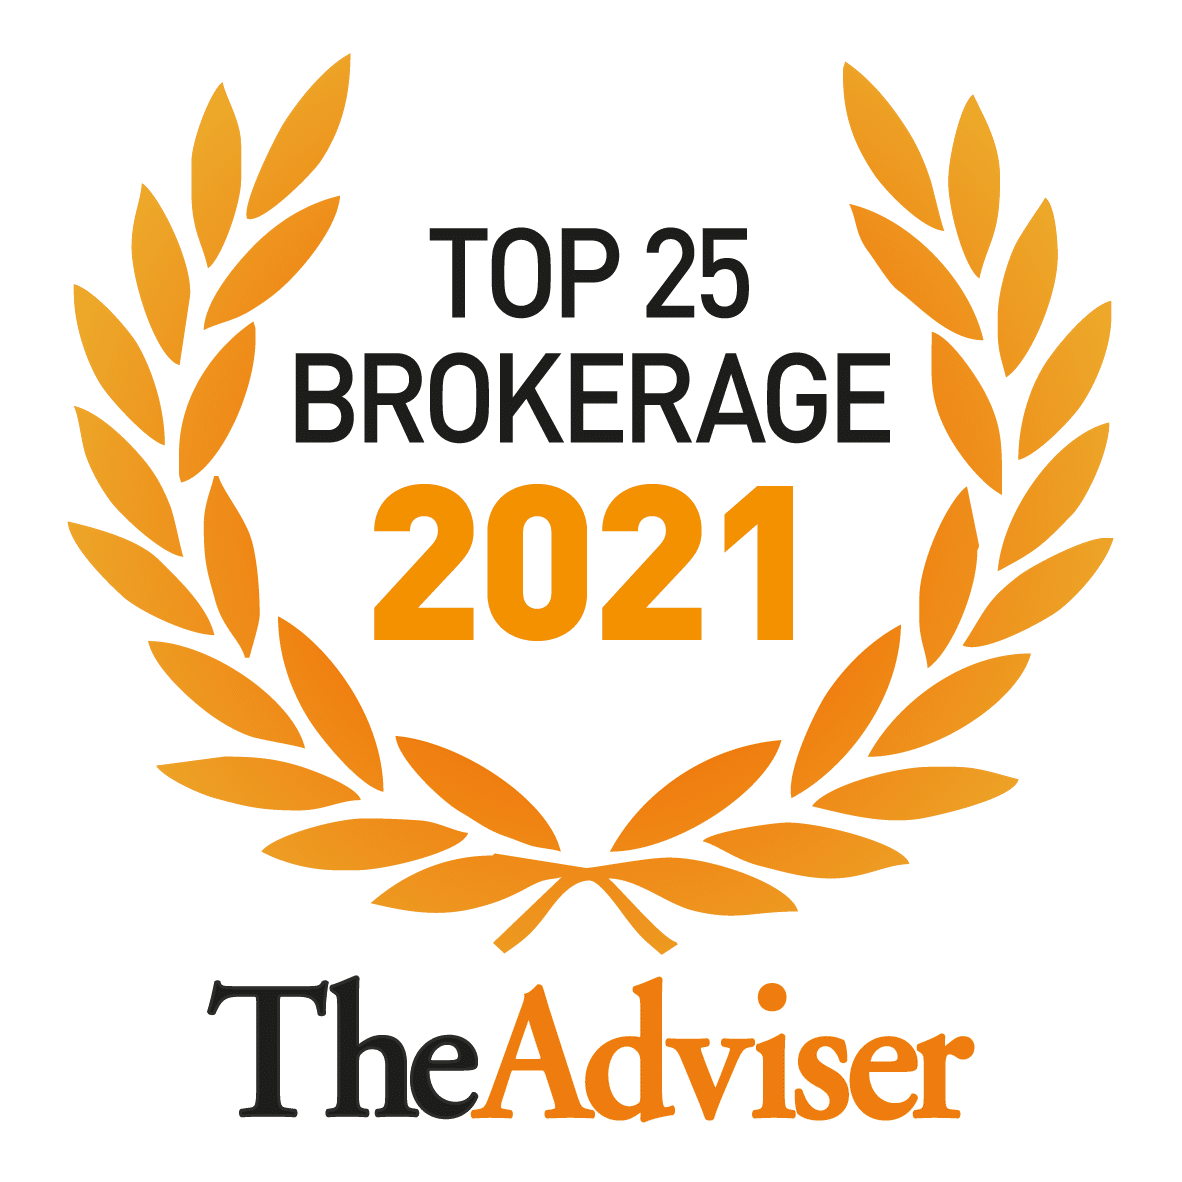  Top 25 Brokerage 2021